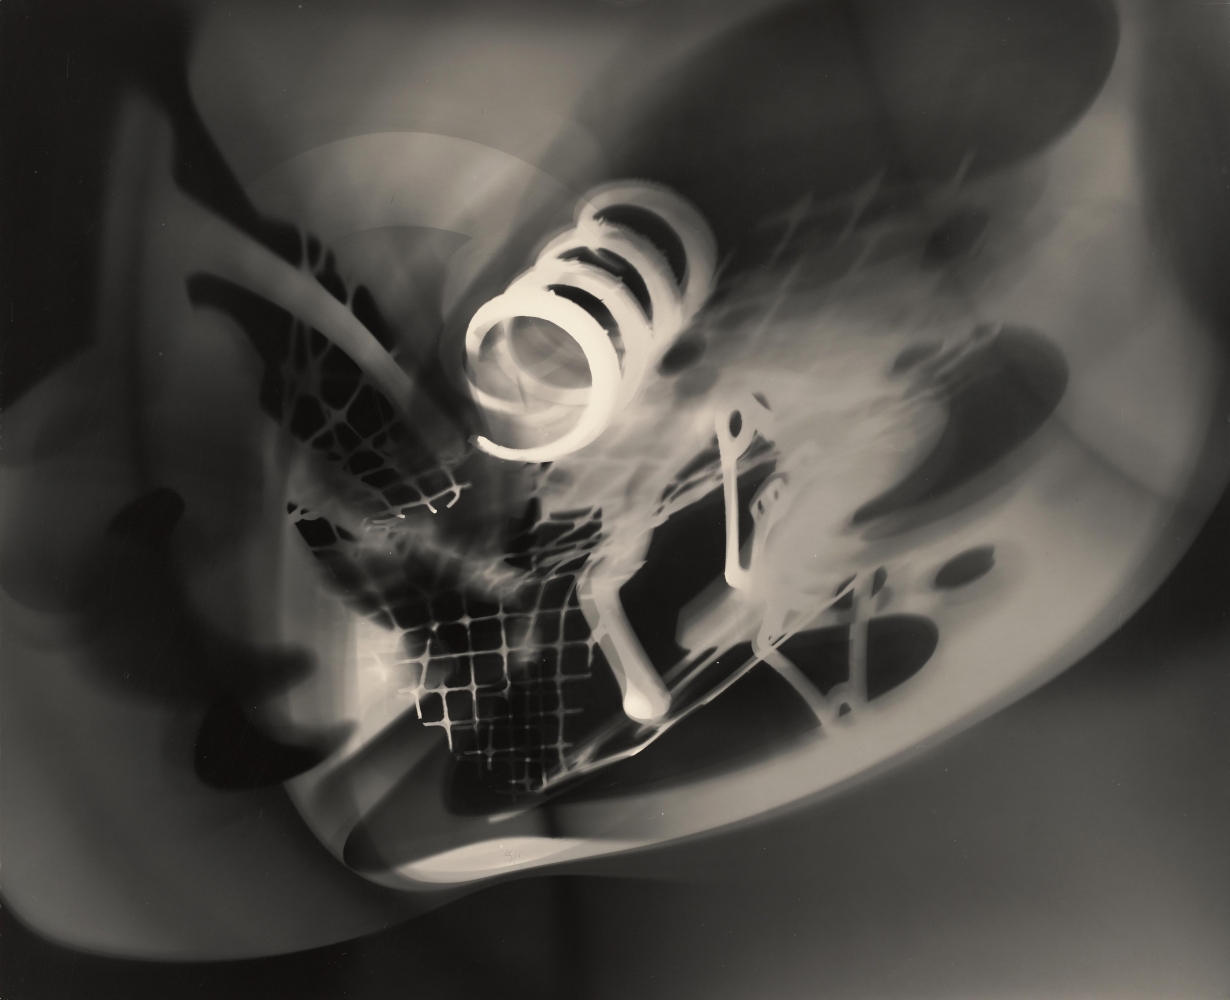 L&amp;aacute;szl&amp;oacute; Moholy-Nagy,&amp;nbsp;Untitled,&amp;nbsp;n.d.